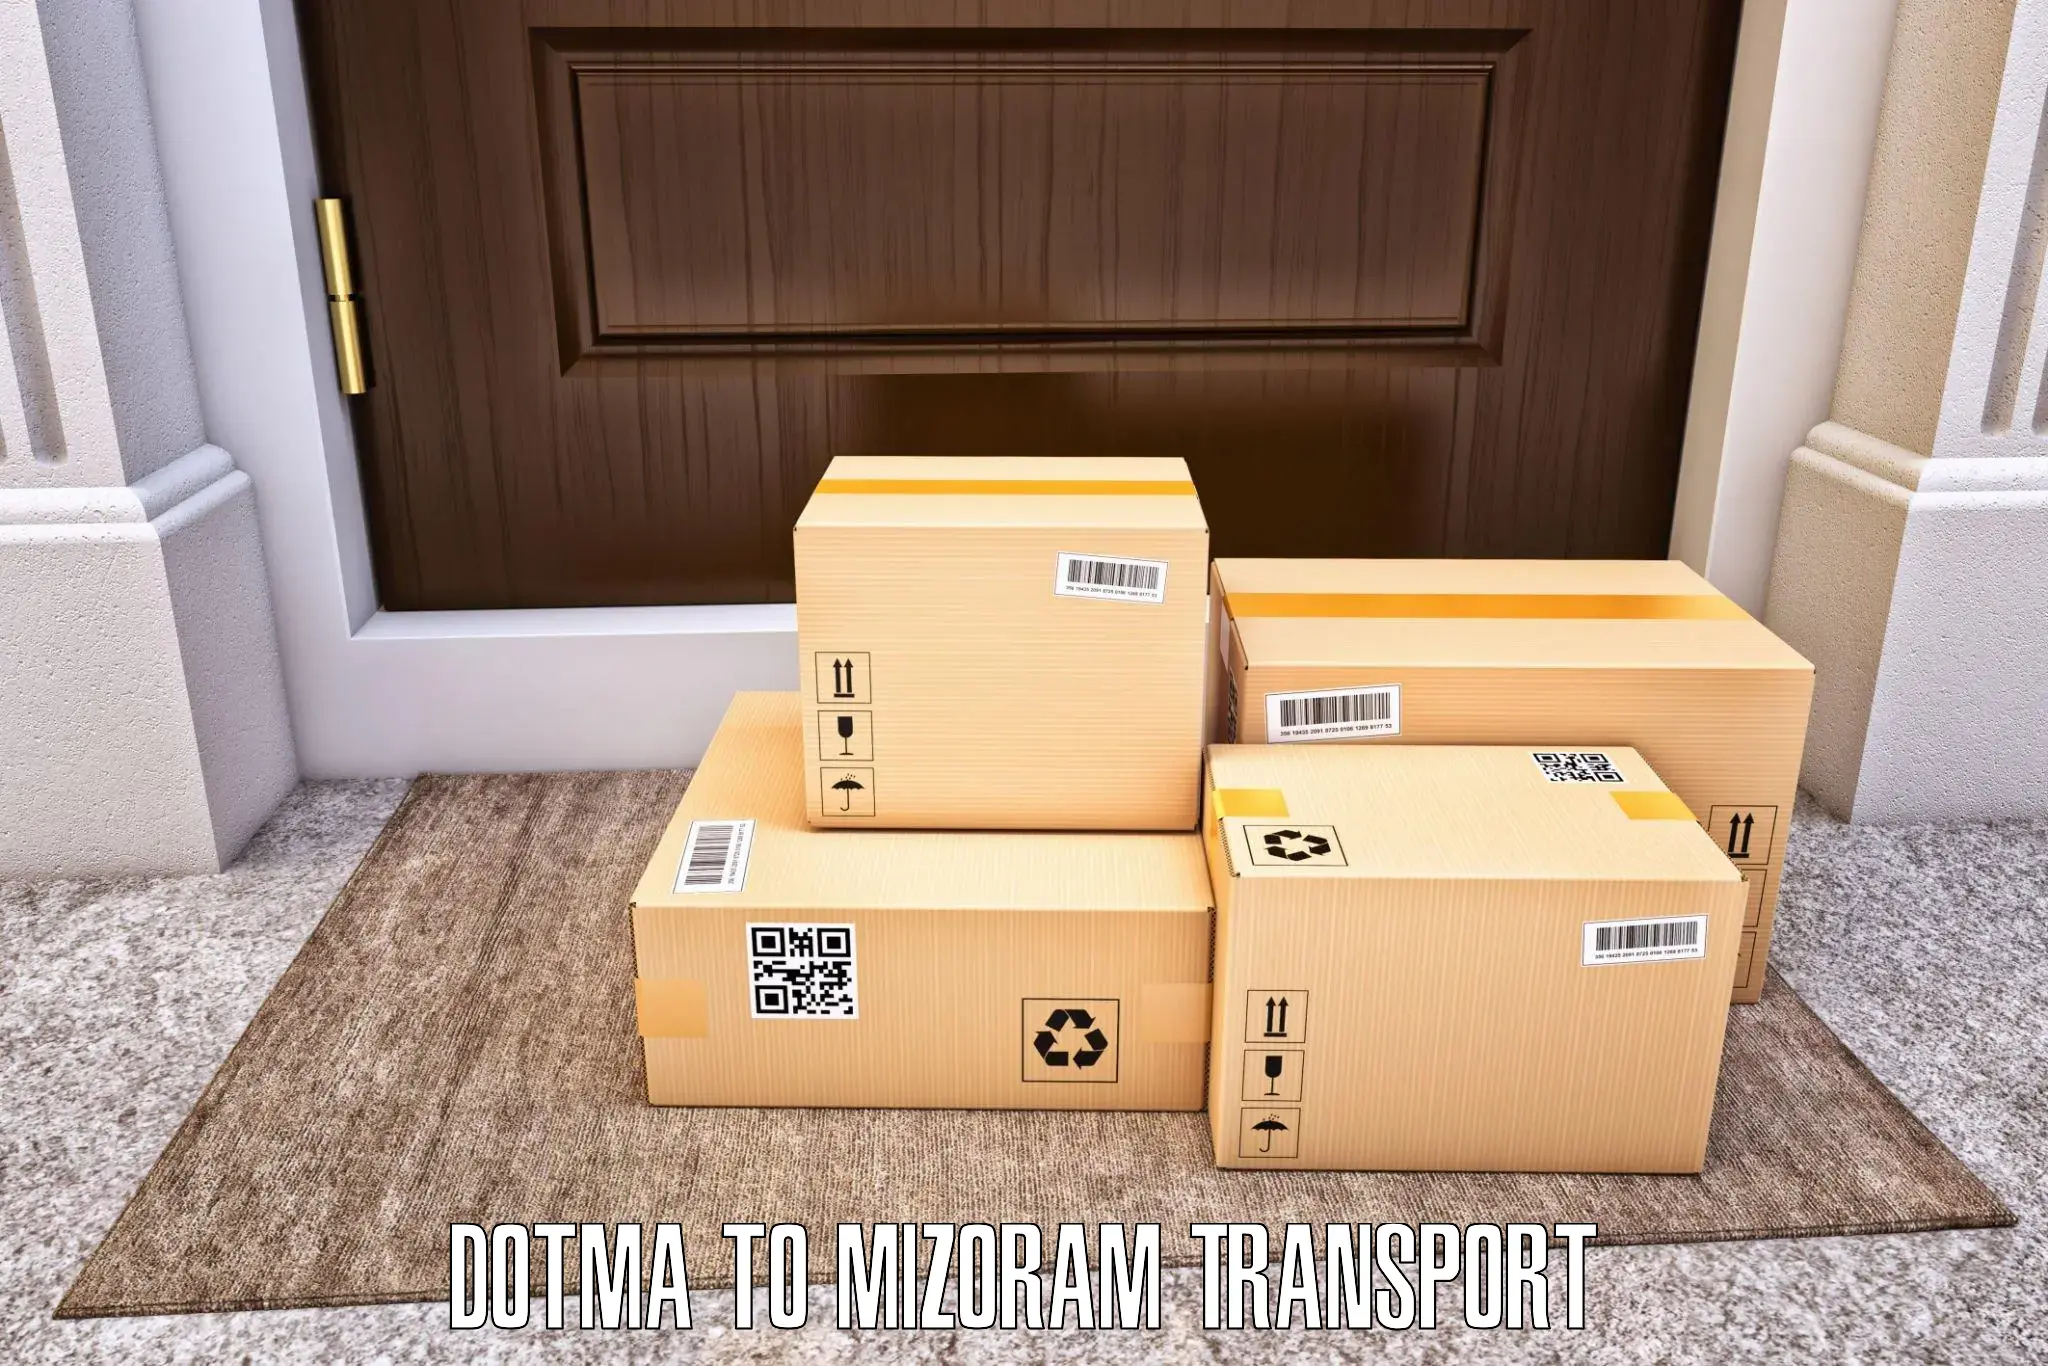 Delivery service in Dotma to Mizoram